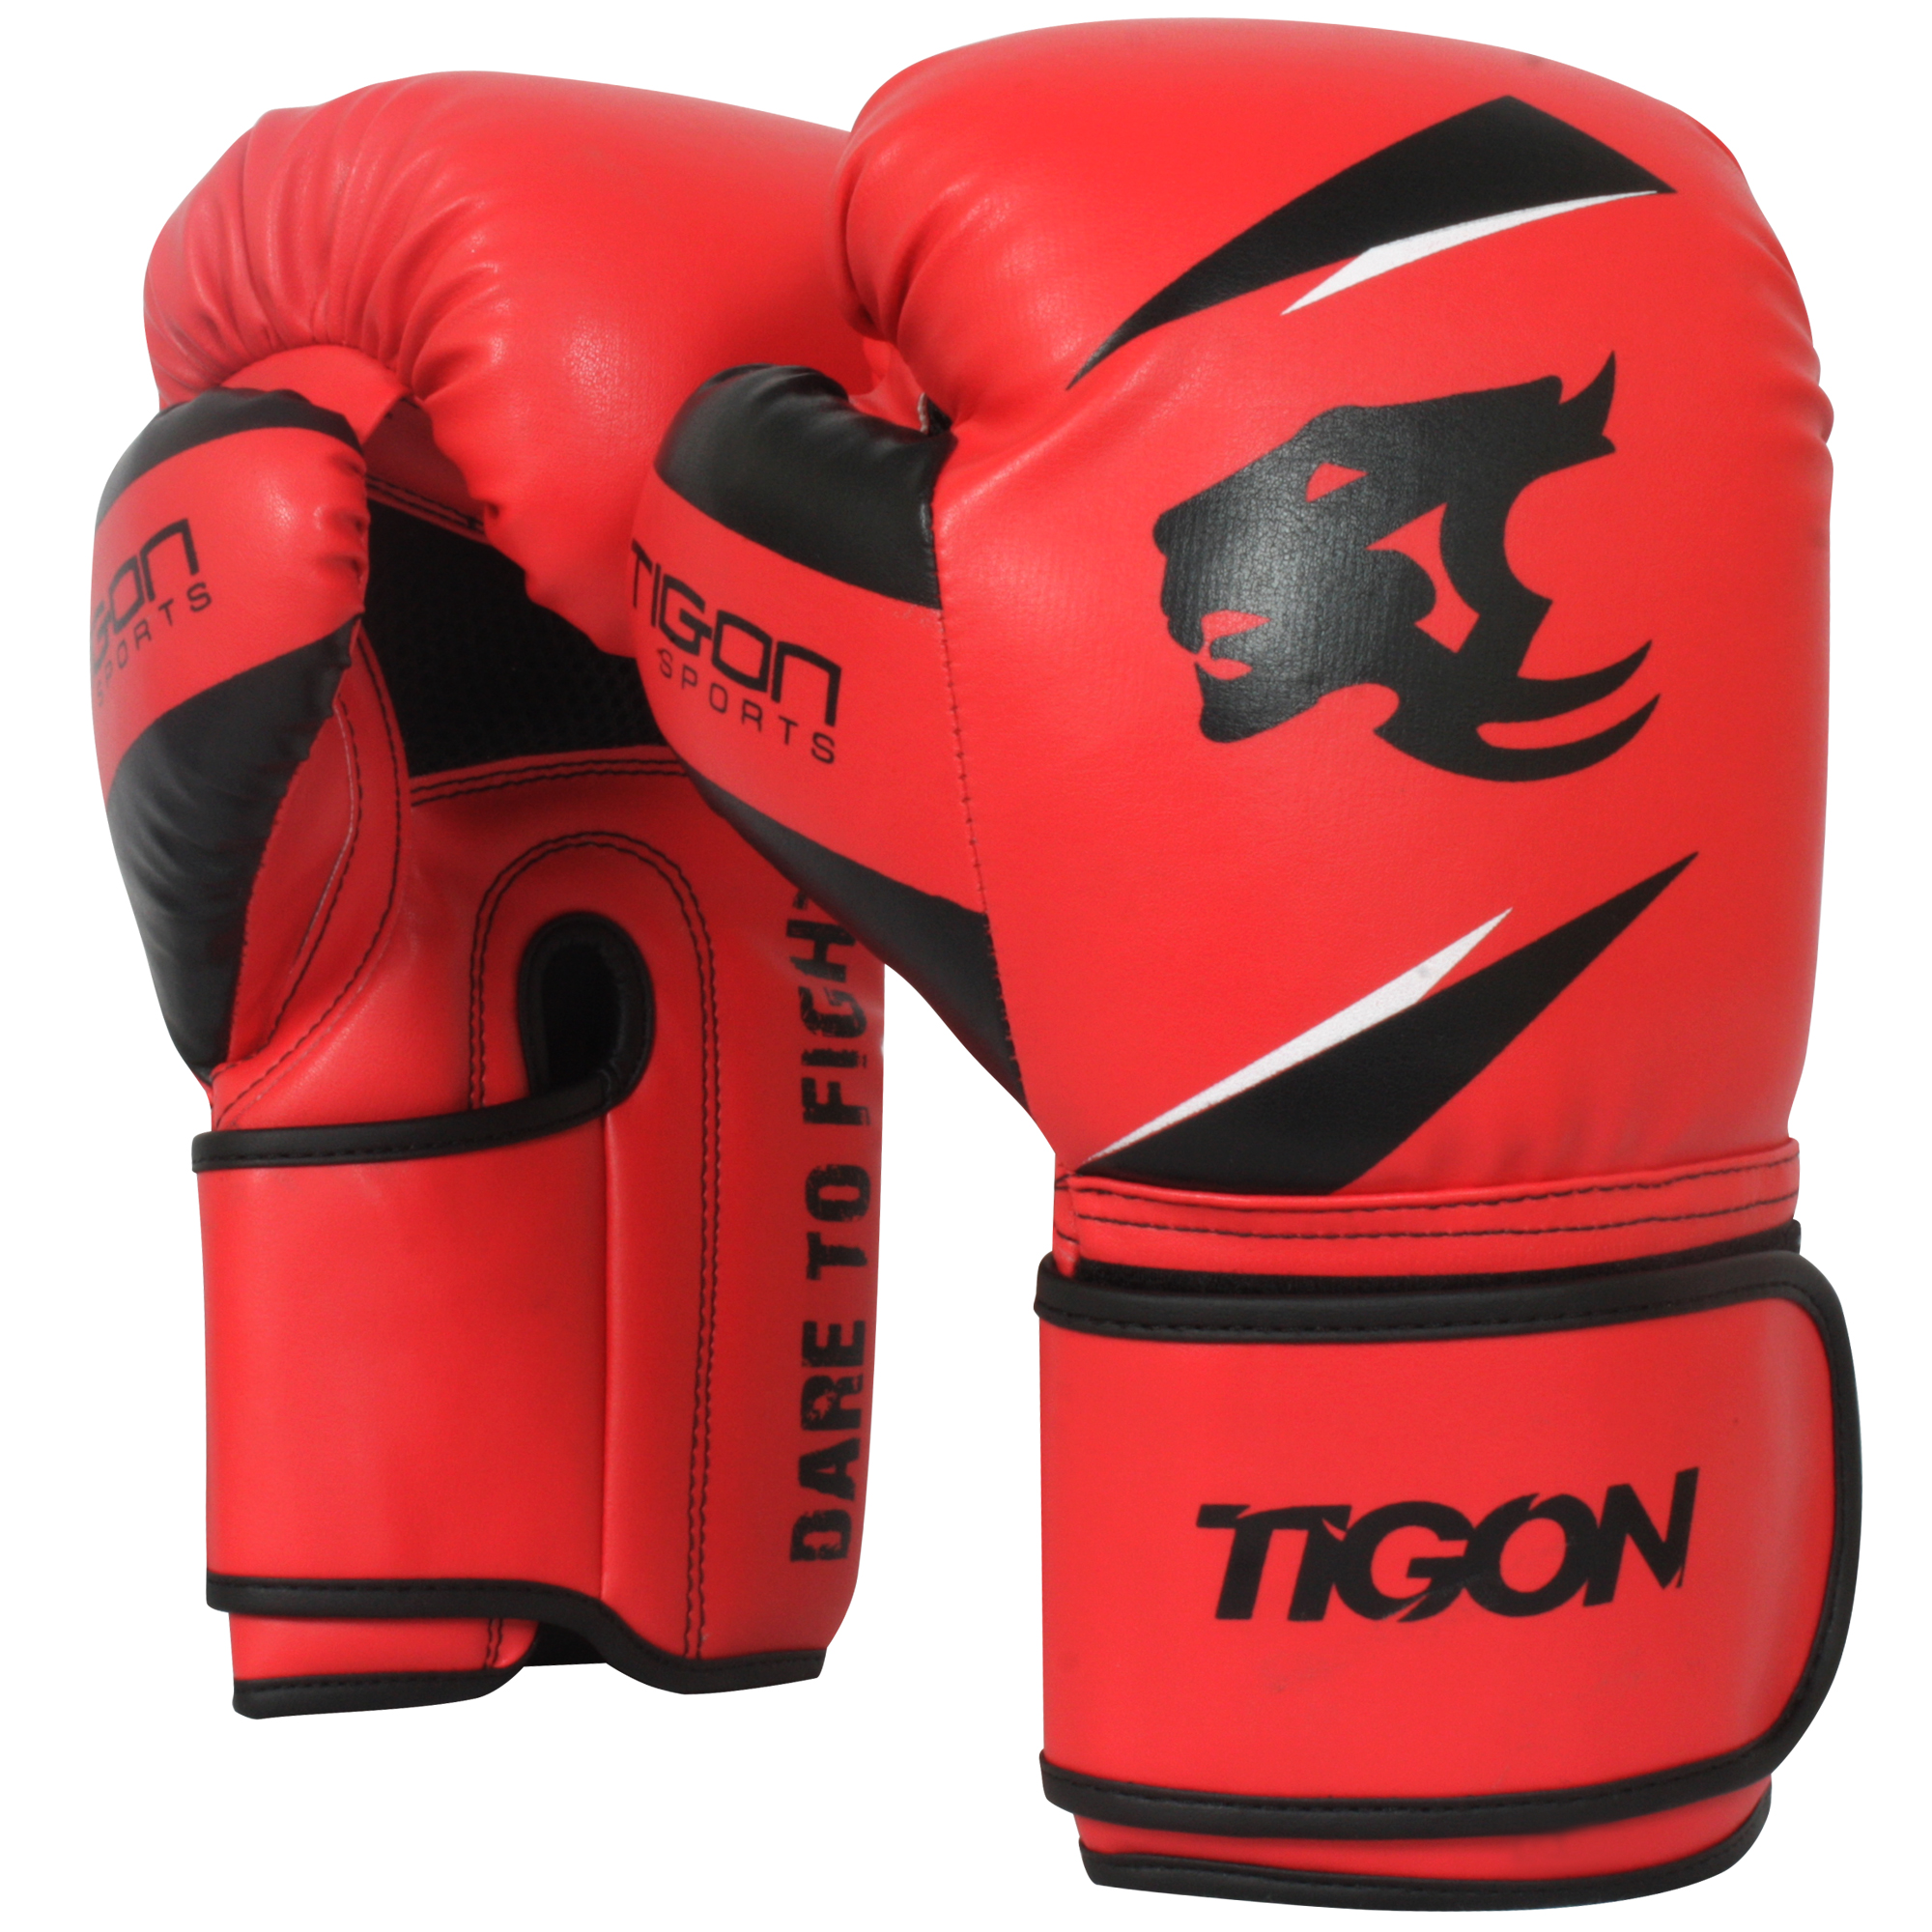 Tigon Semi Contact Point Gloves Boxing Muay Thai Kick Karate Taekwondo Red Blue 